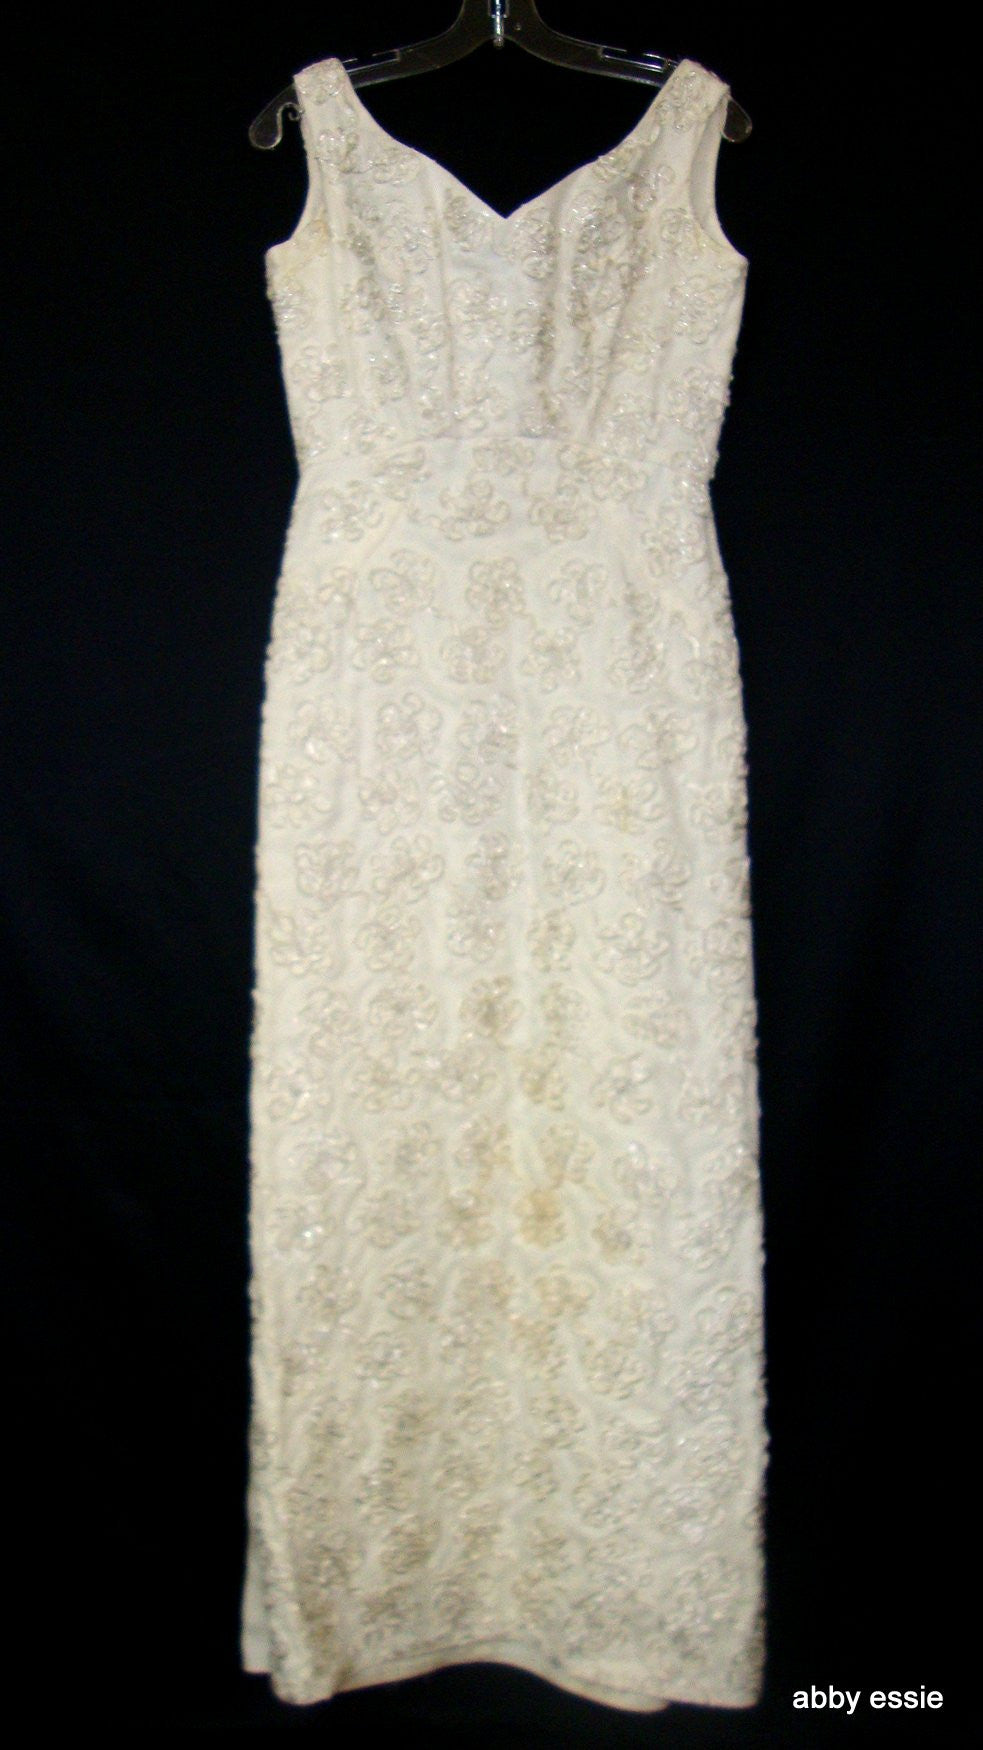 Vintage Mike Benet Wedding Cream White Floral Rosette Design Dress Small